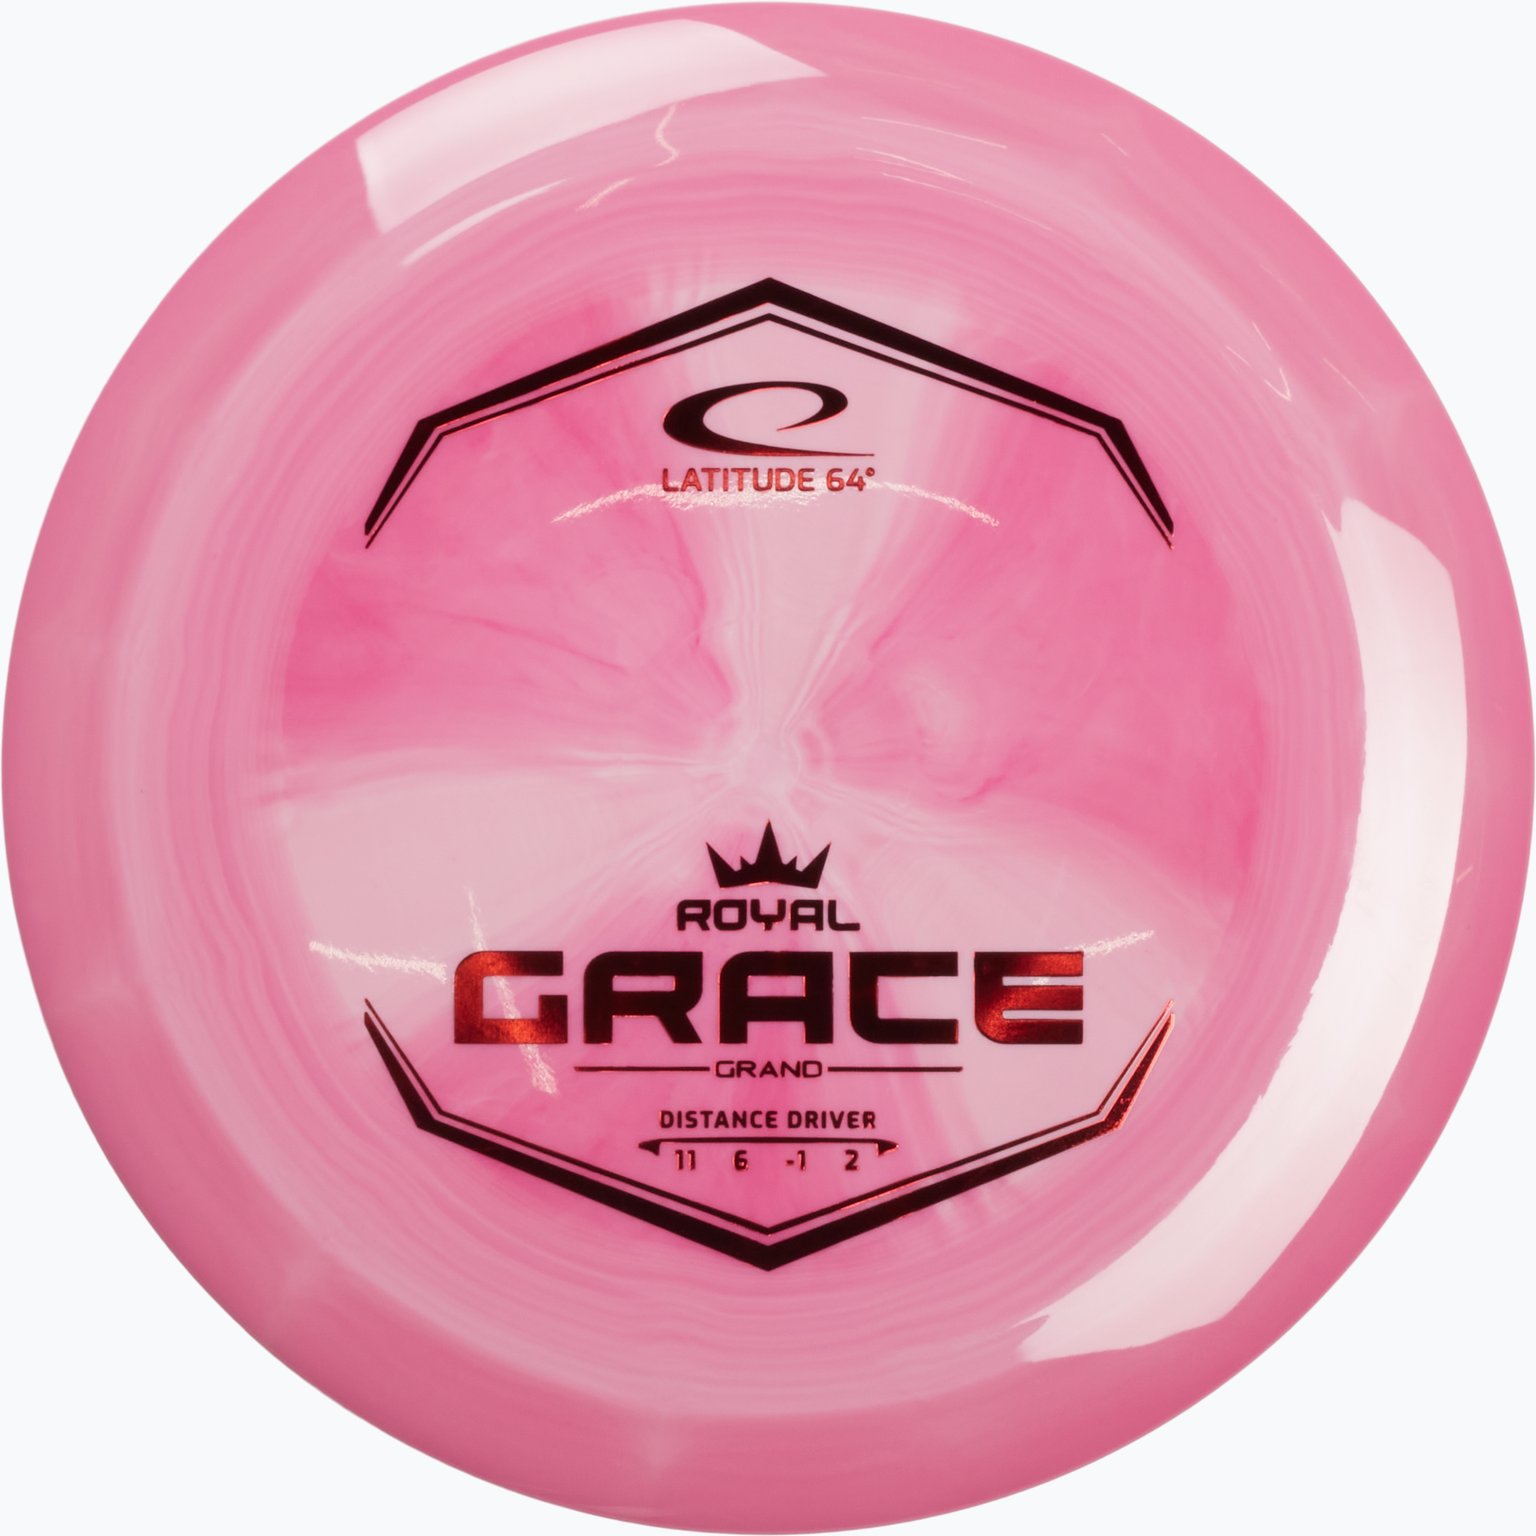 Grand Grace Distance Driver disc